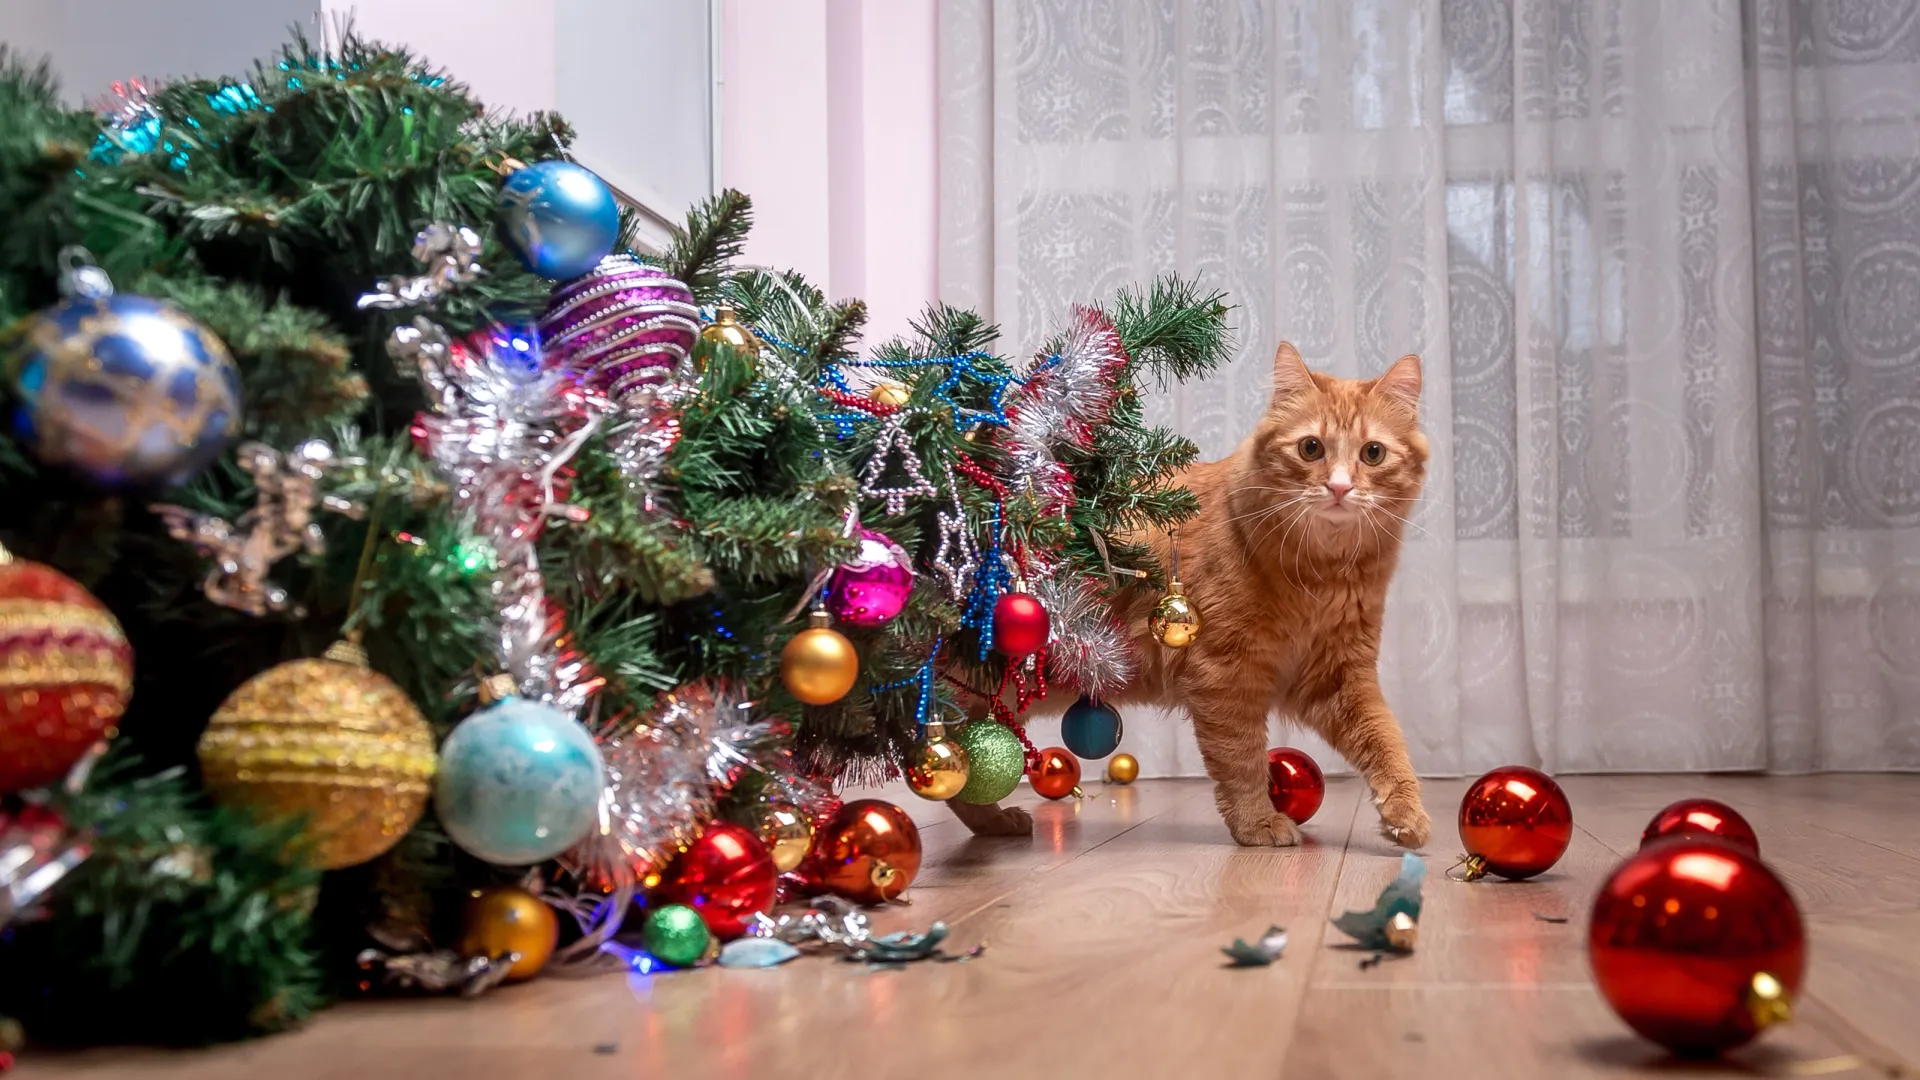 Рано или поздно кот все равно уронит елку. Фото: Sharomka / Shutterstock / Fotodom